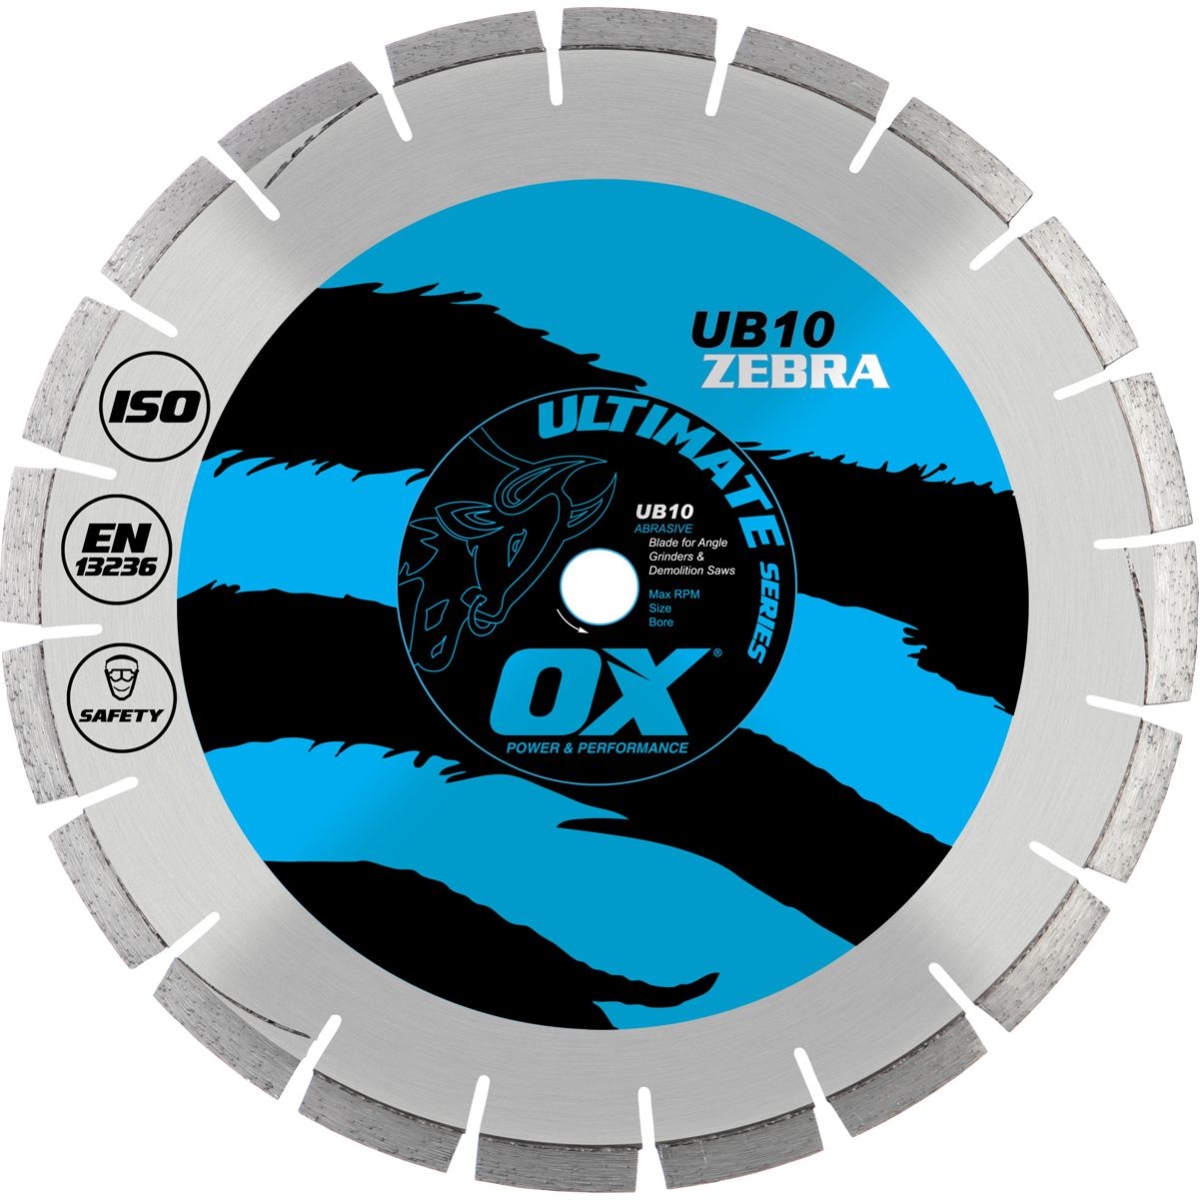 OX UB10 Ultimate Zebra Diamond Blade